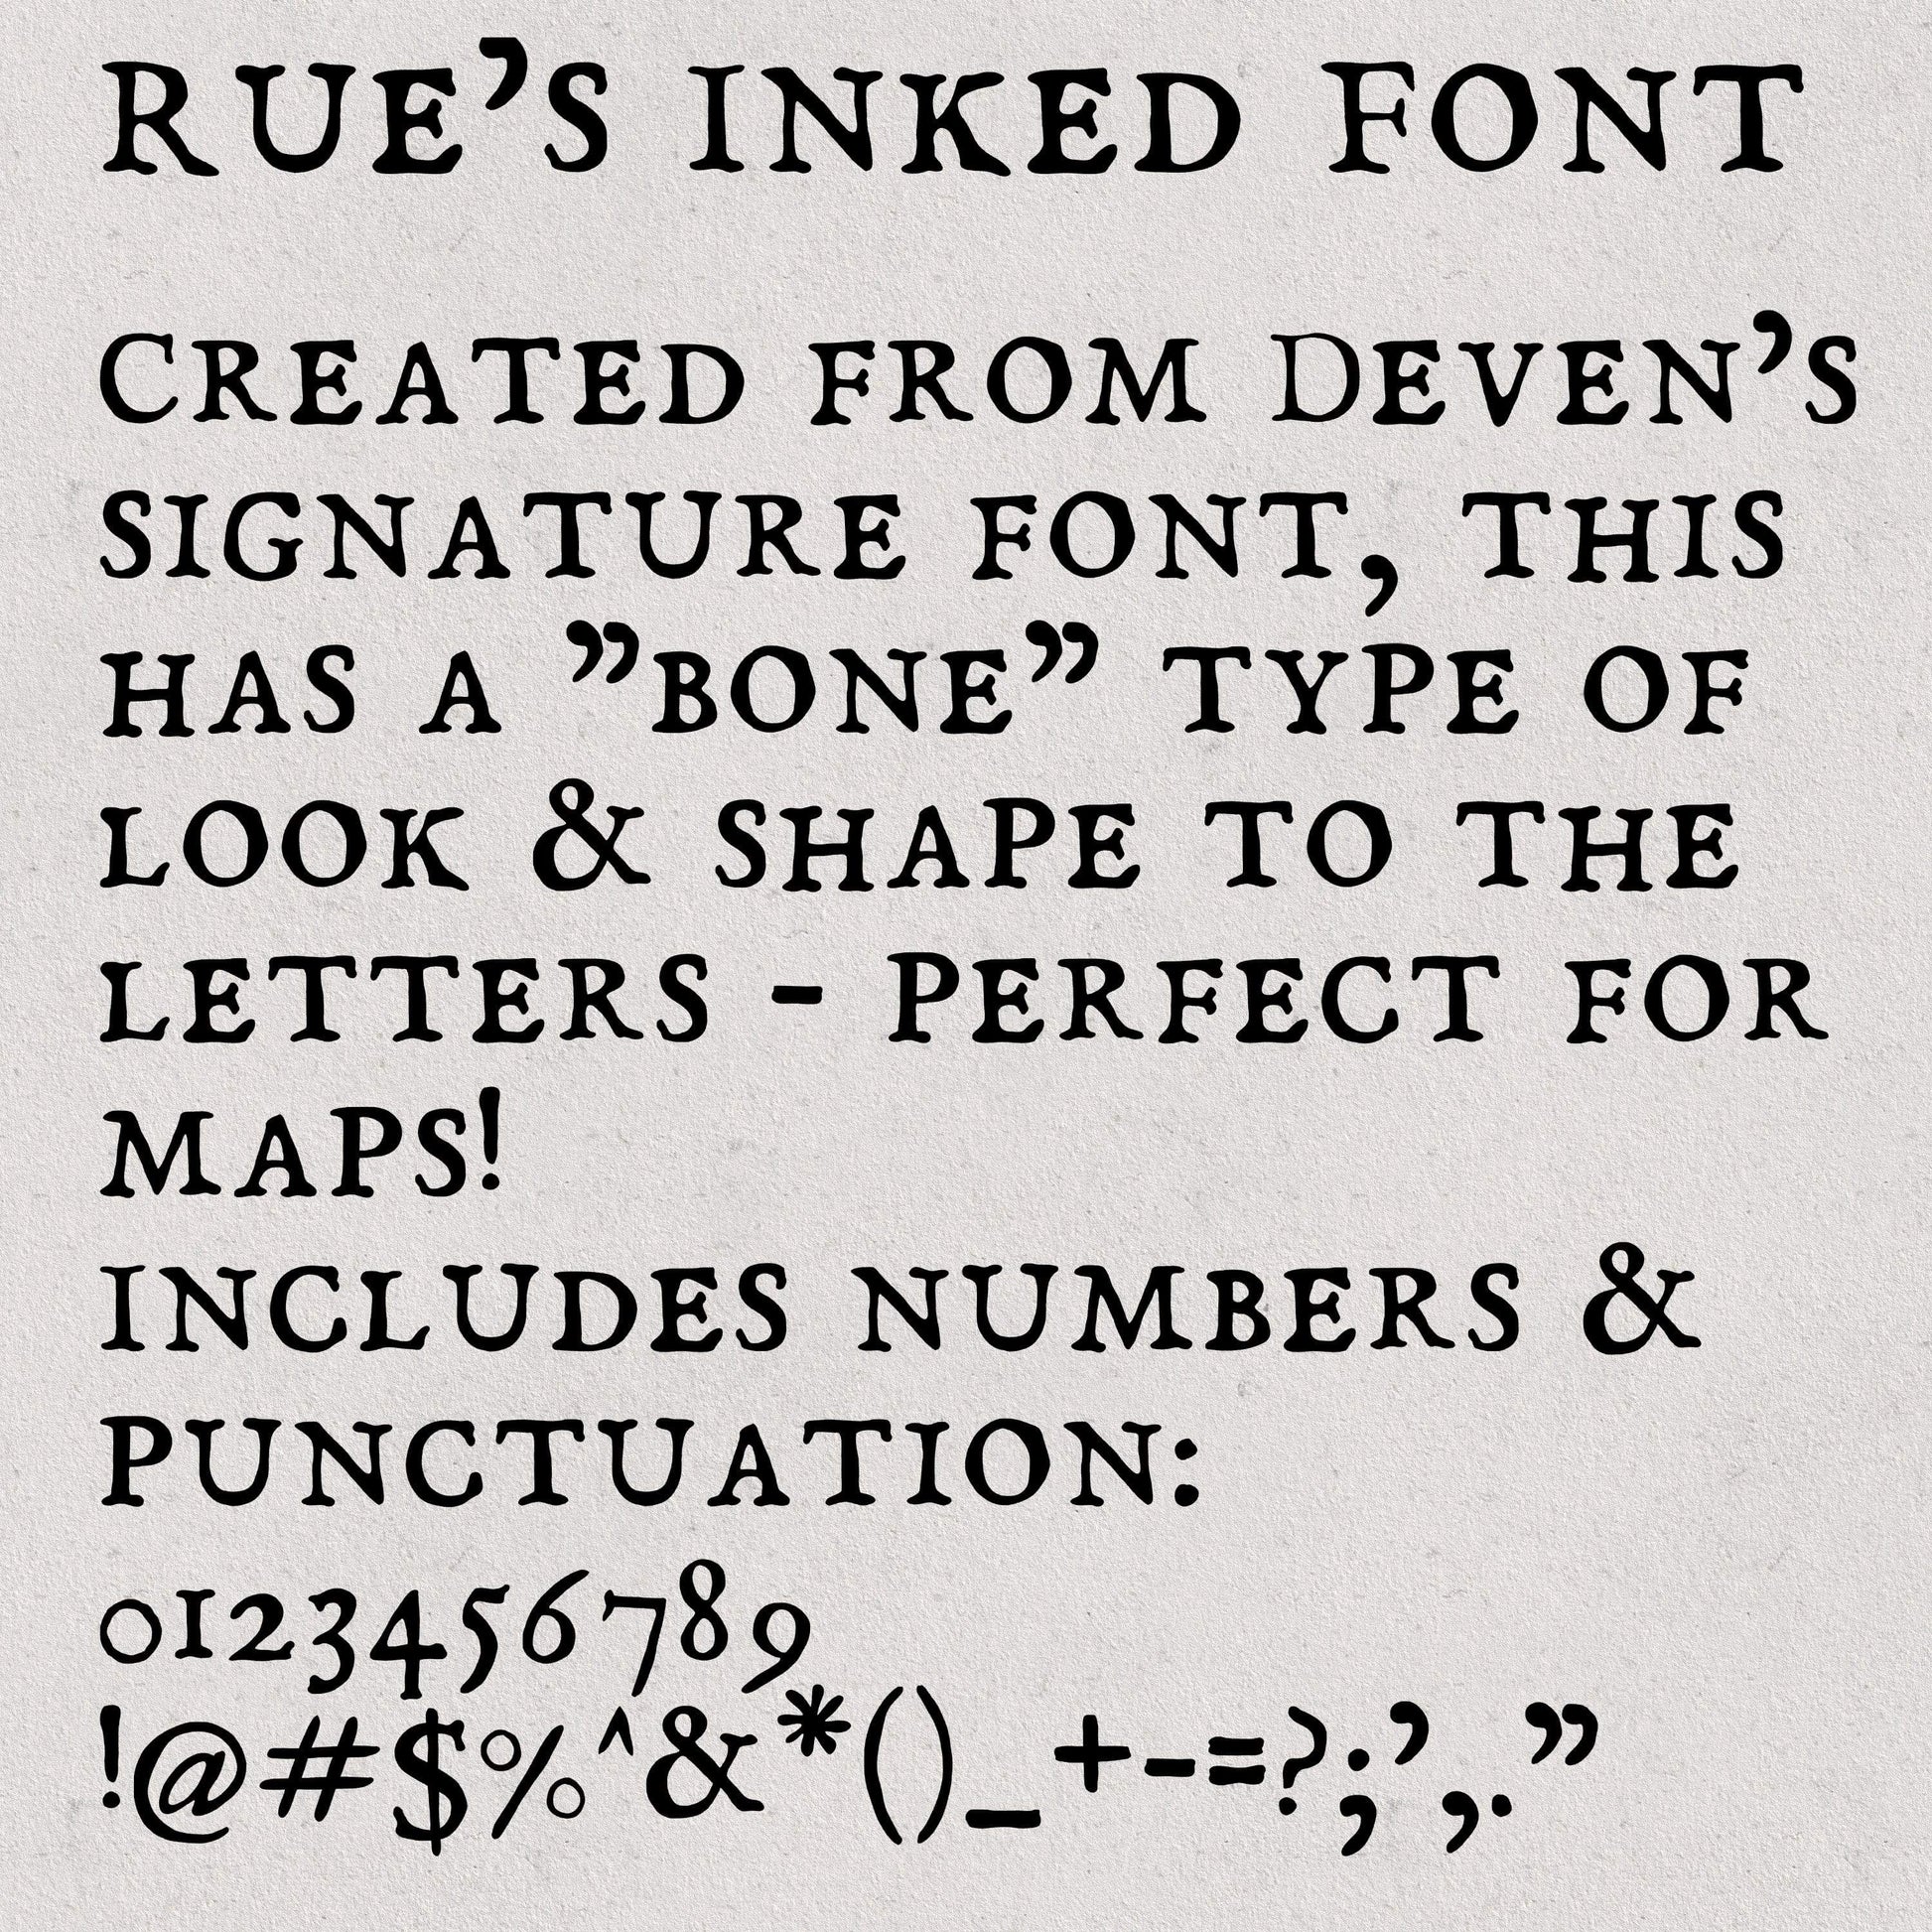 Rue's Inked Font Font Deven Rue